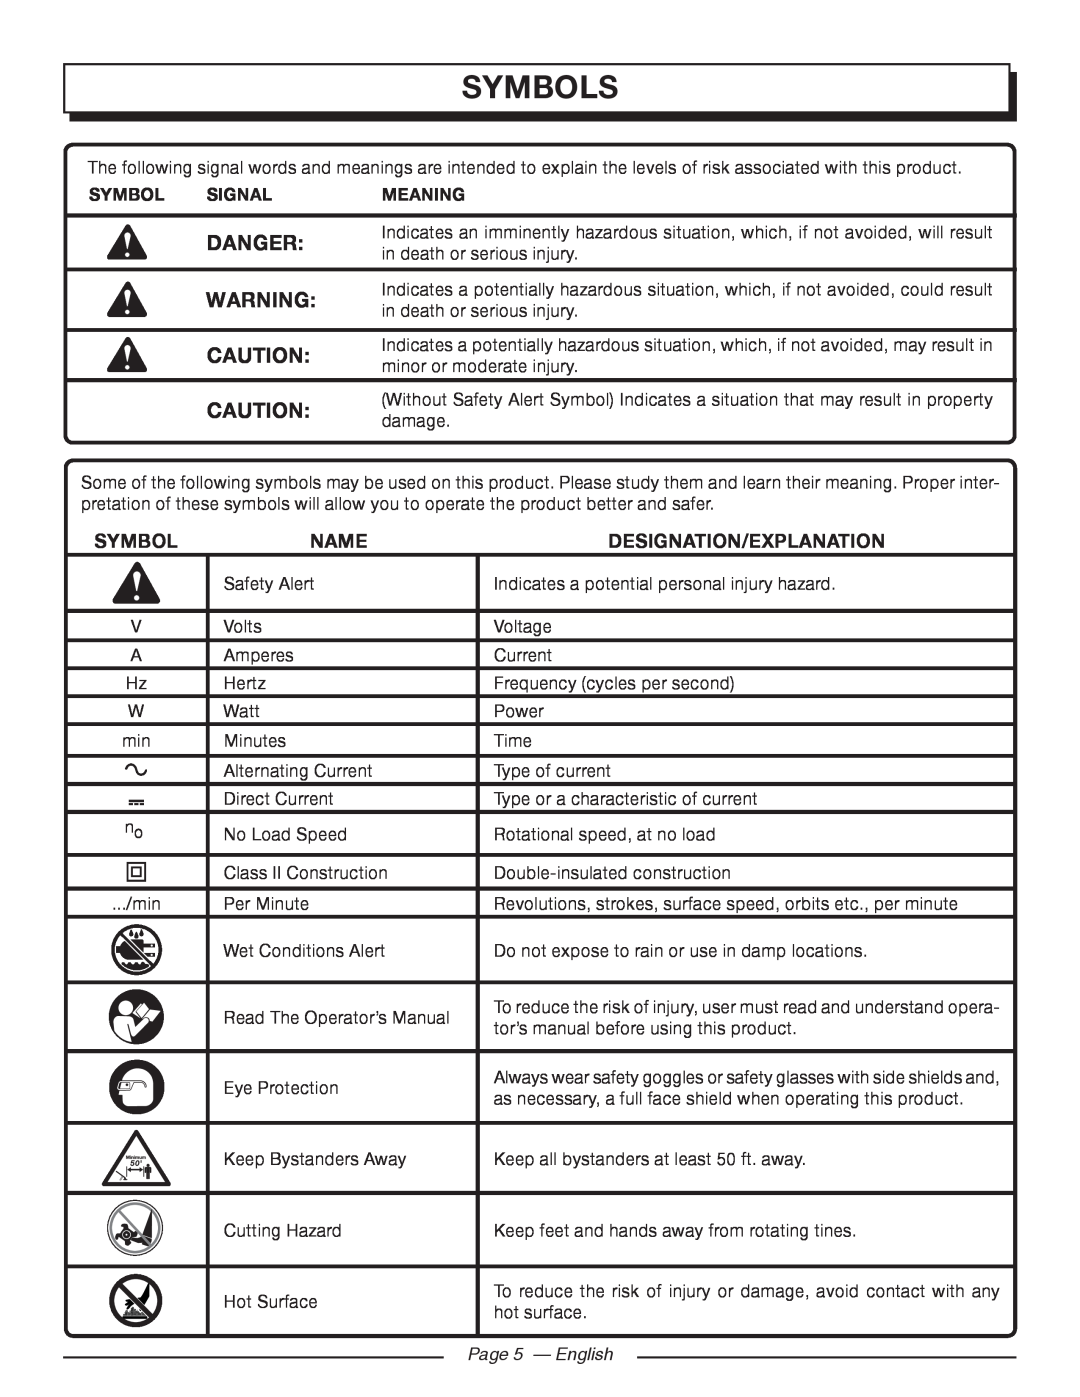 Homelite UT46510 manuel dutilisation Symbols, Danger, Name, Designation/Explanation, Signal, Meaning, Page 5 - English 